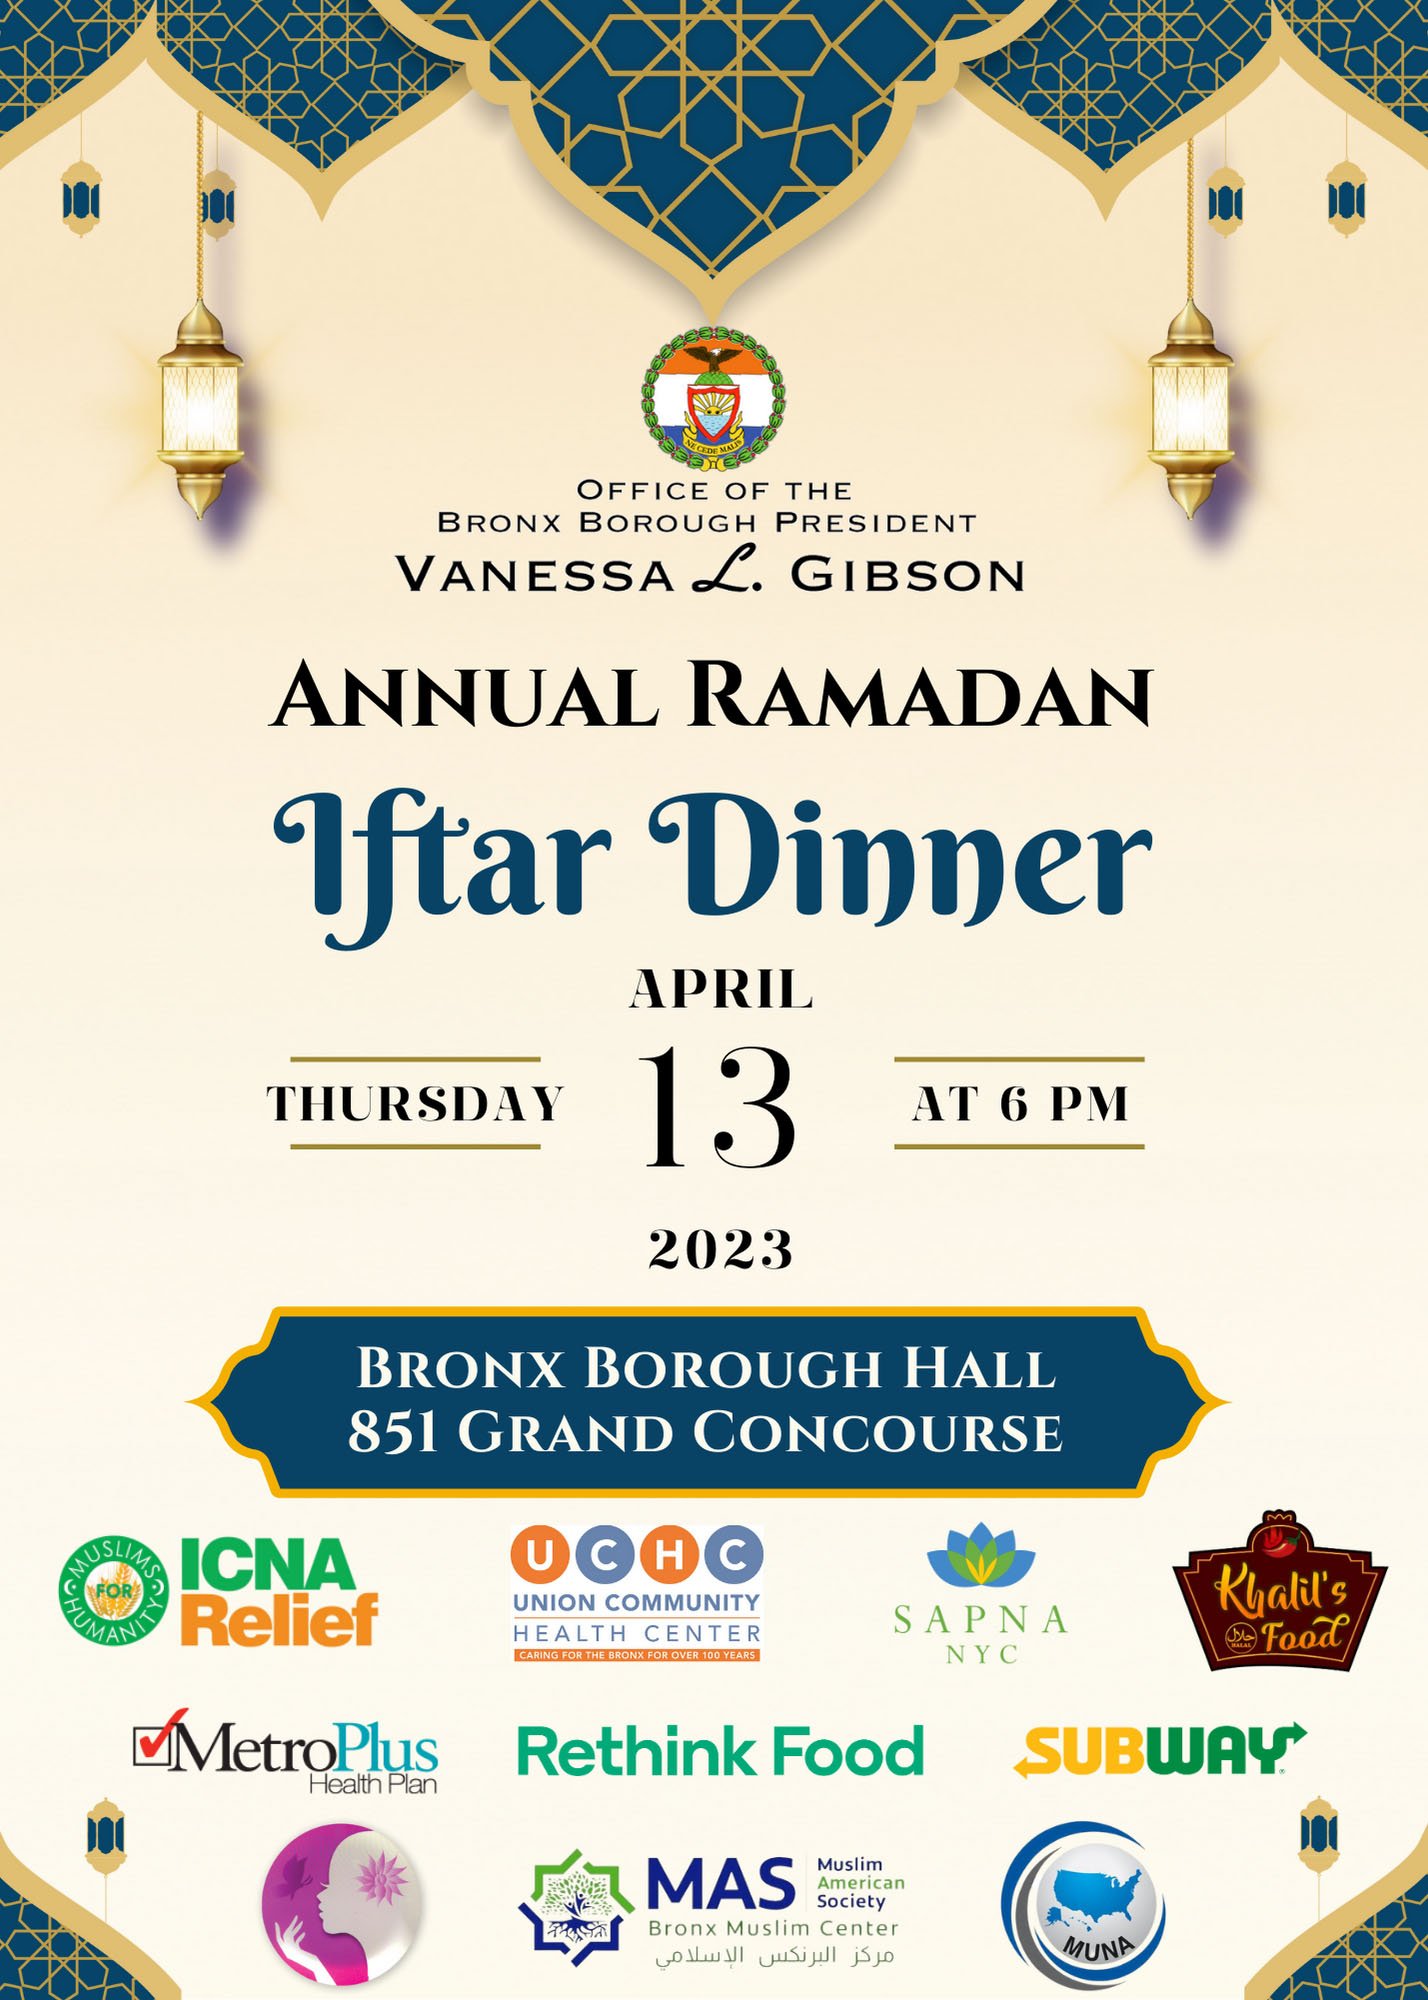 Flyer for Annual Ramadan Iftar Dinner on April 13